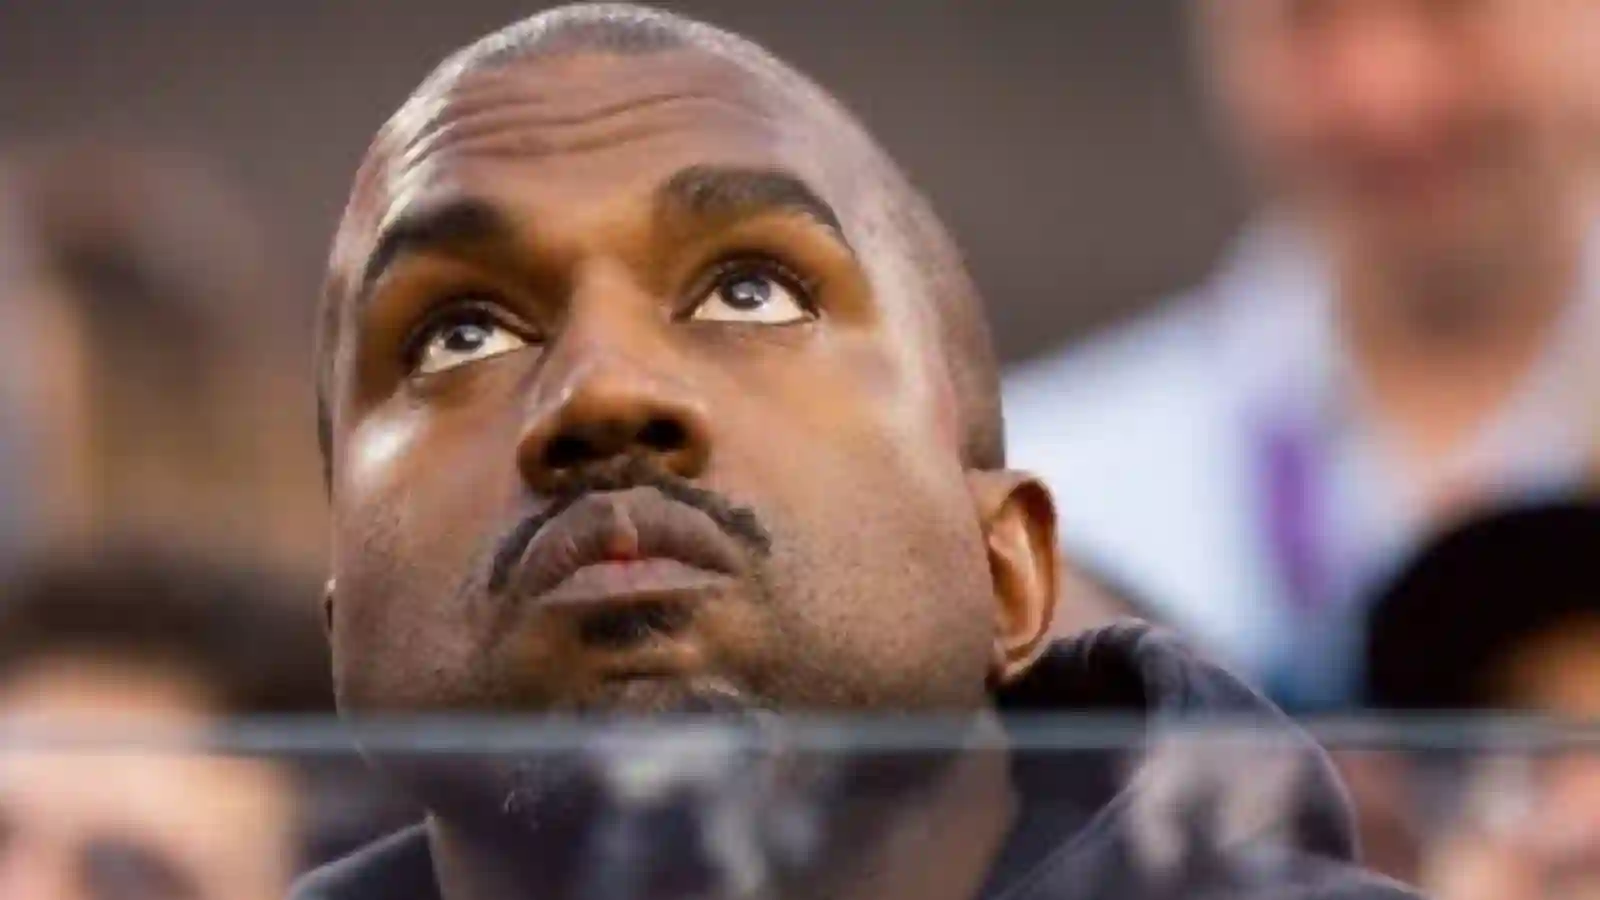 Kanye West's SAIC honorary degree is revoked